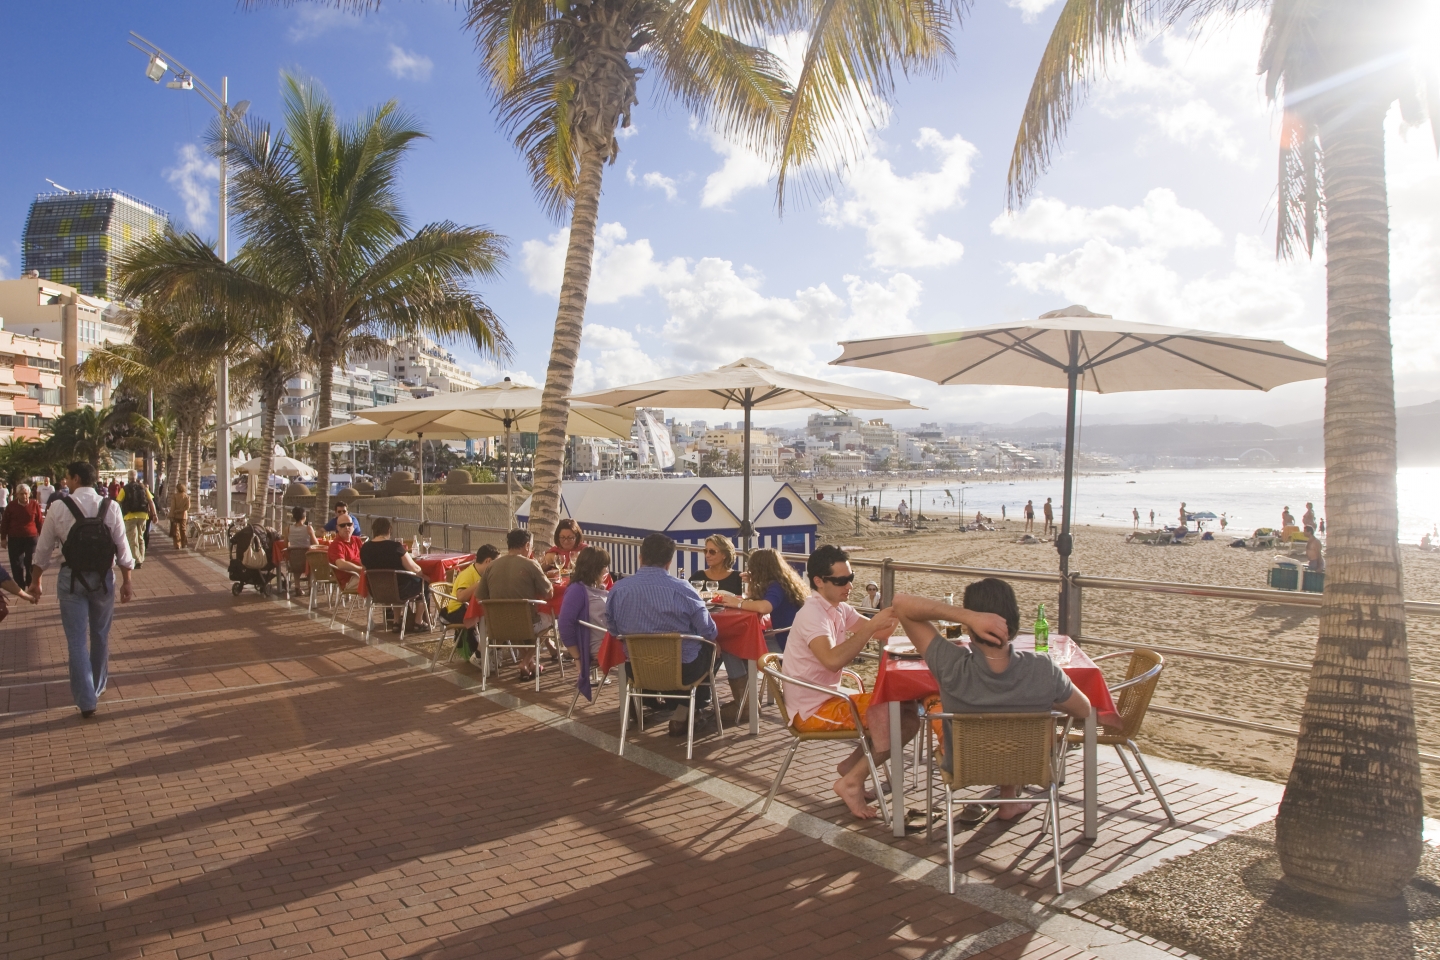 Las Canteras beach promeande with restaurants